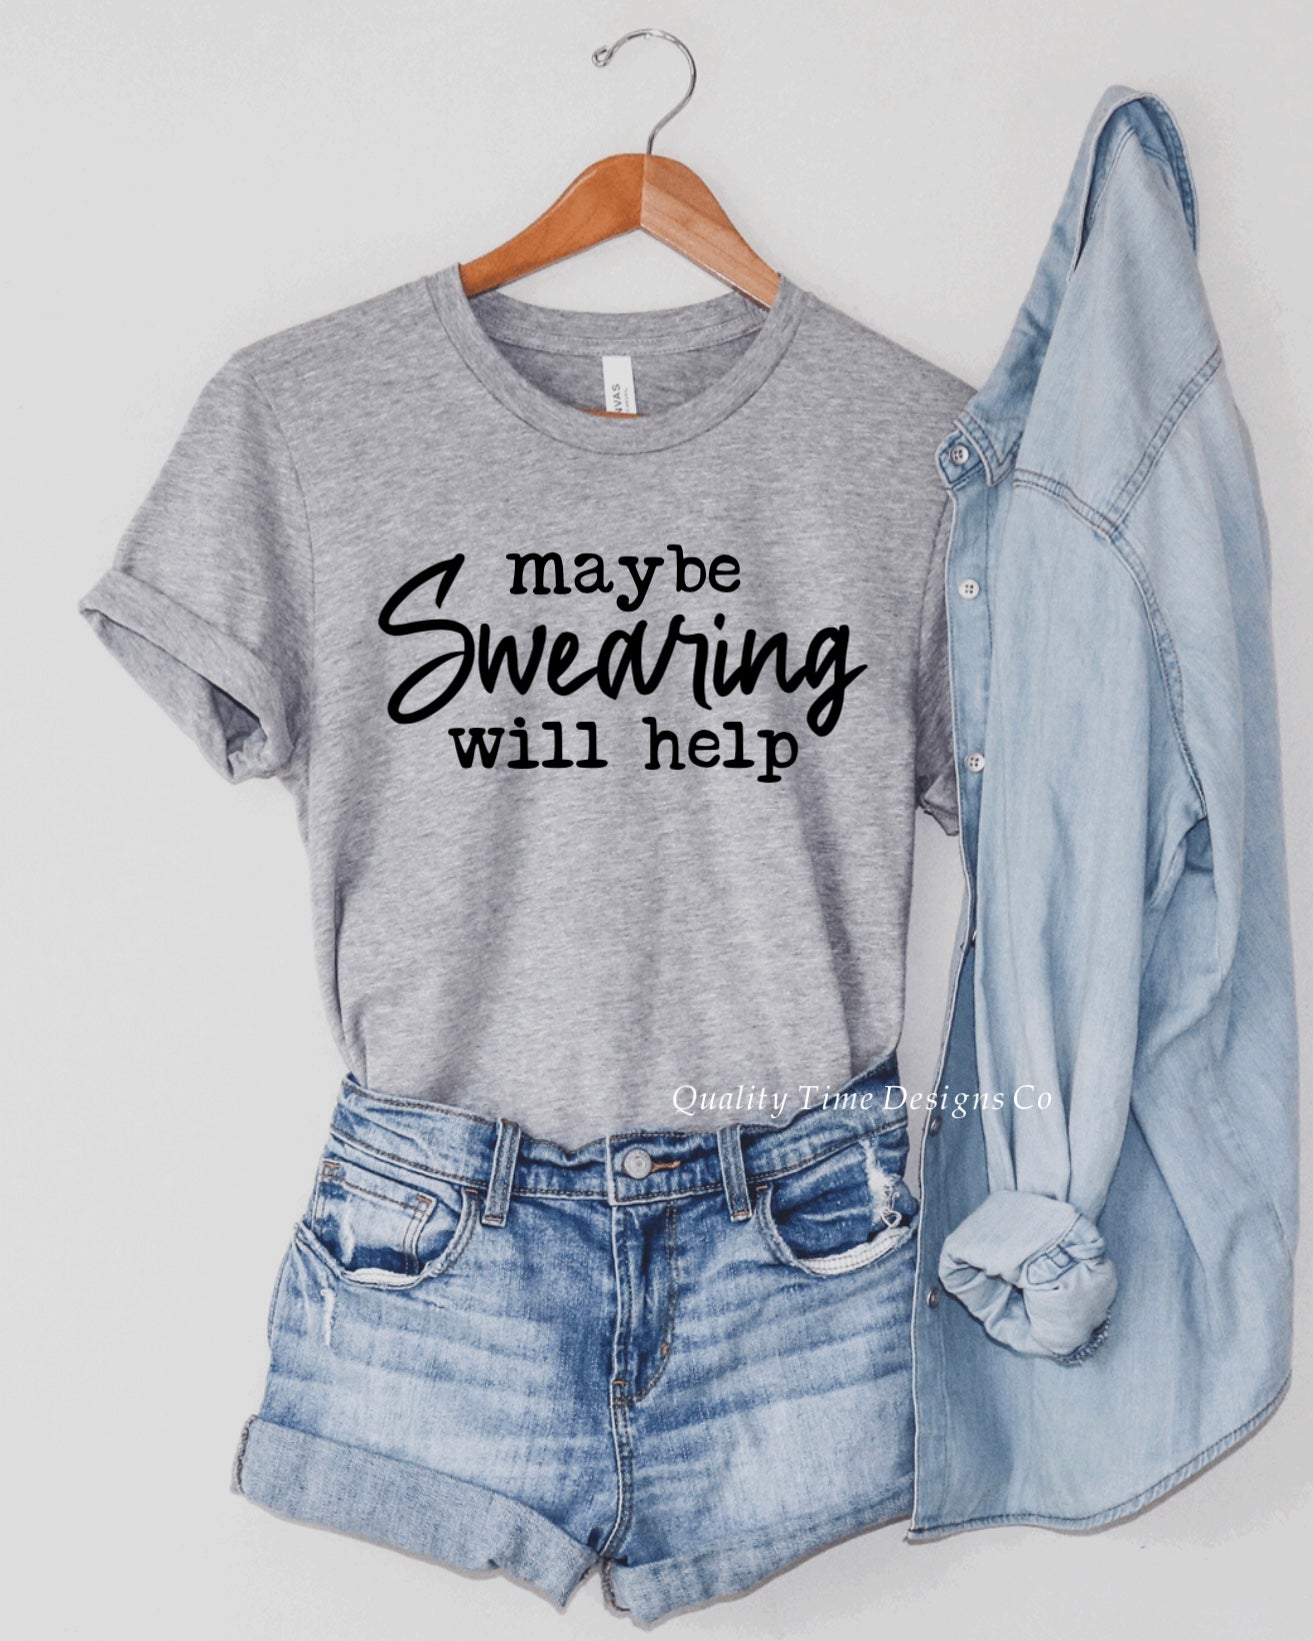 Maybe swearing will help t-shirt 